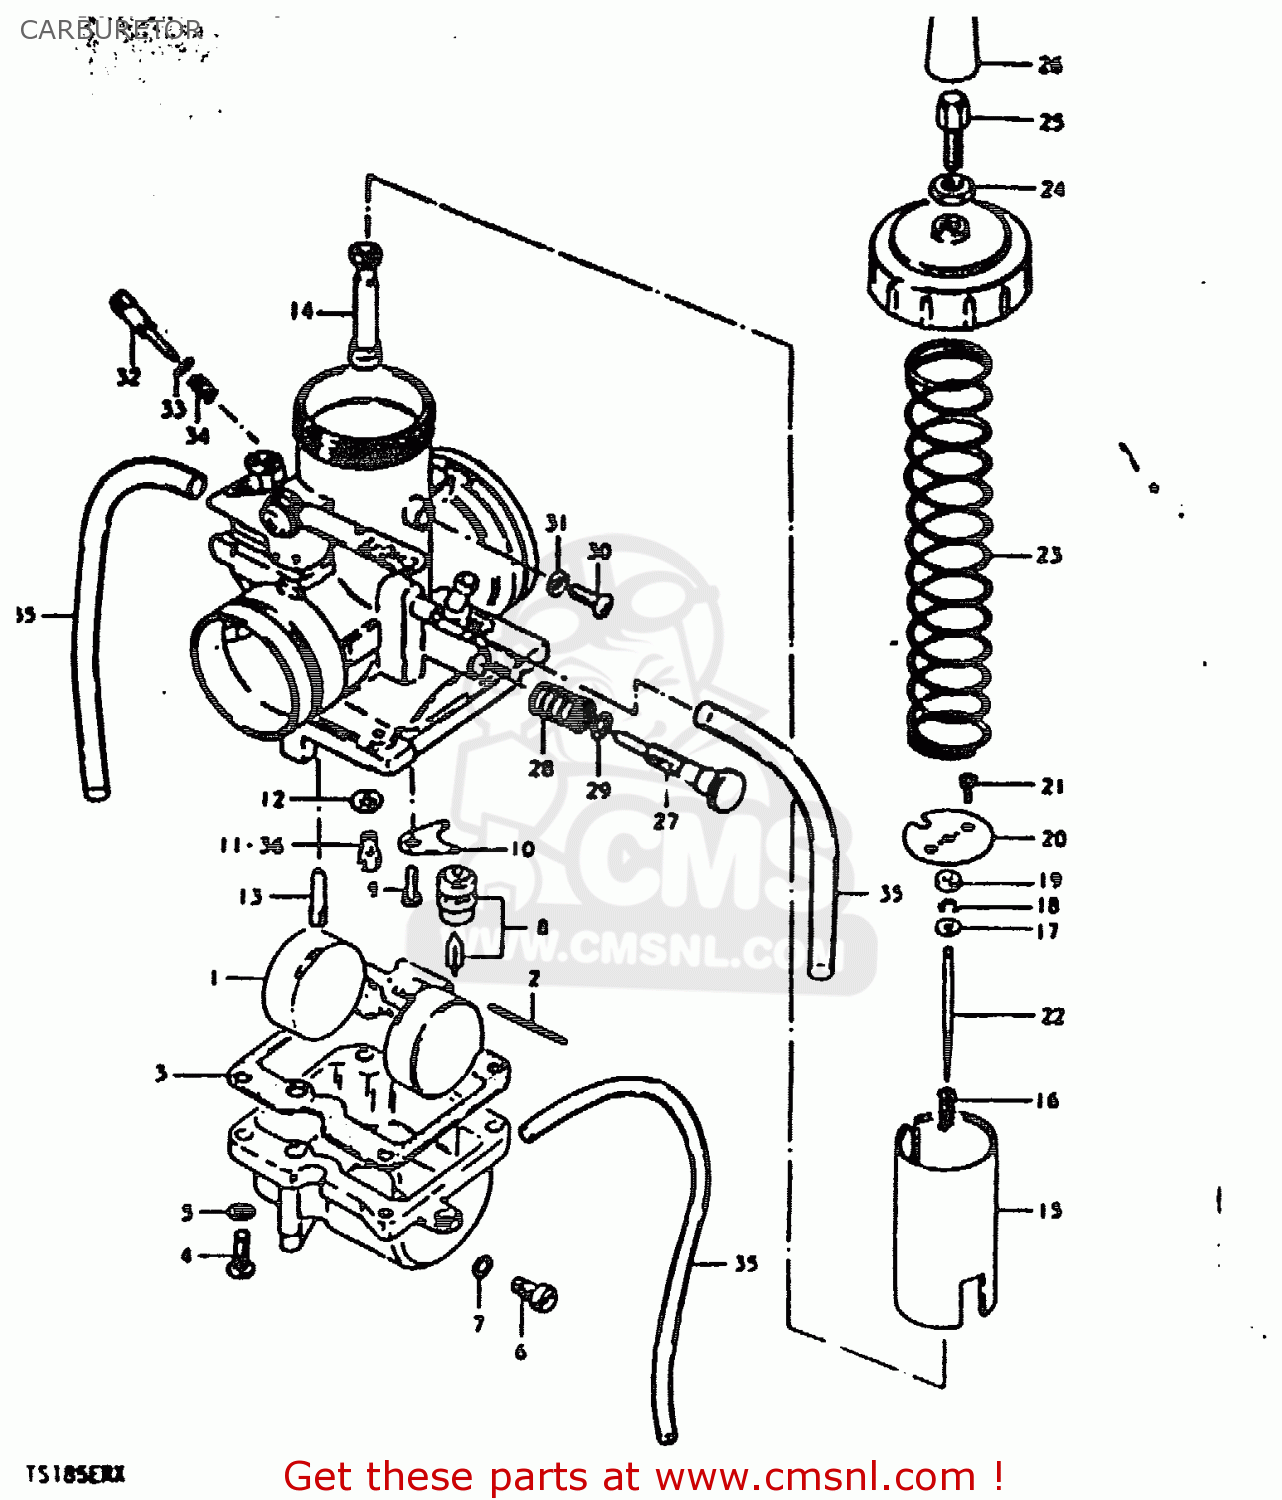 Carburetor for Suzuki TS185 1971-1981 